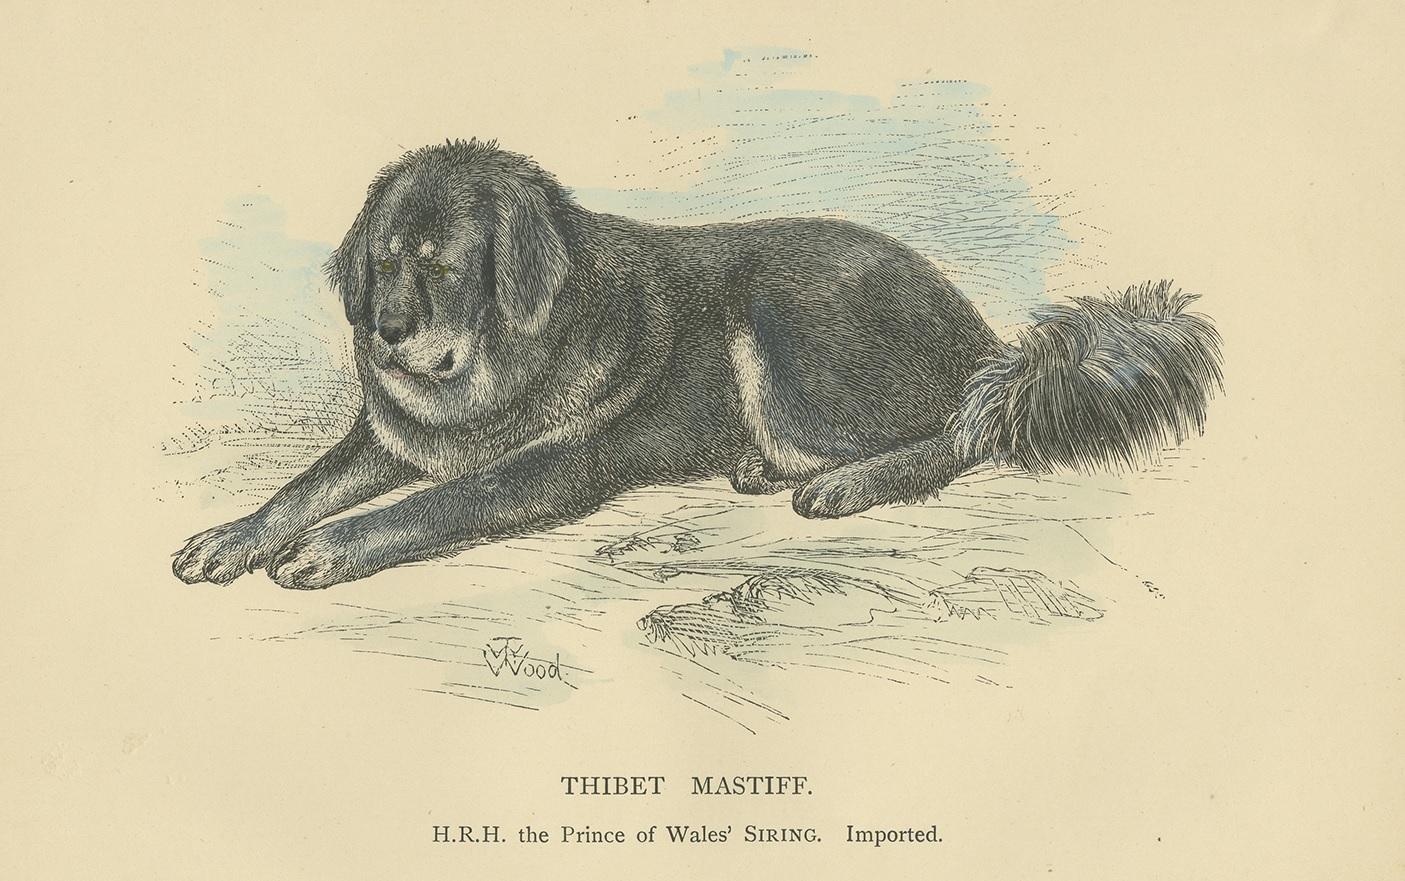 Antique print titled 'Thibet Mastiff'. Dog print of a Tibetan Mastiff. Published circa 1890.